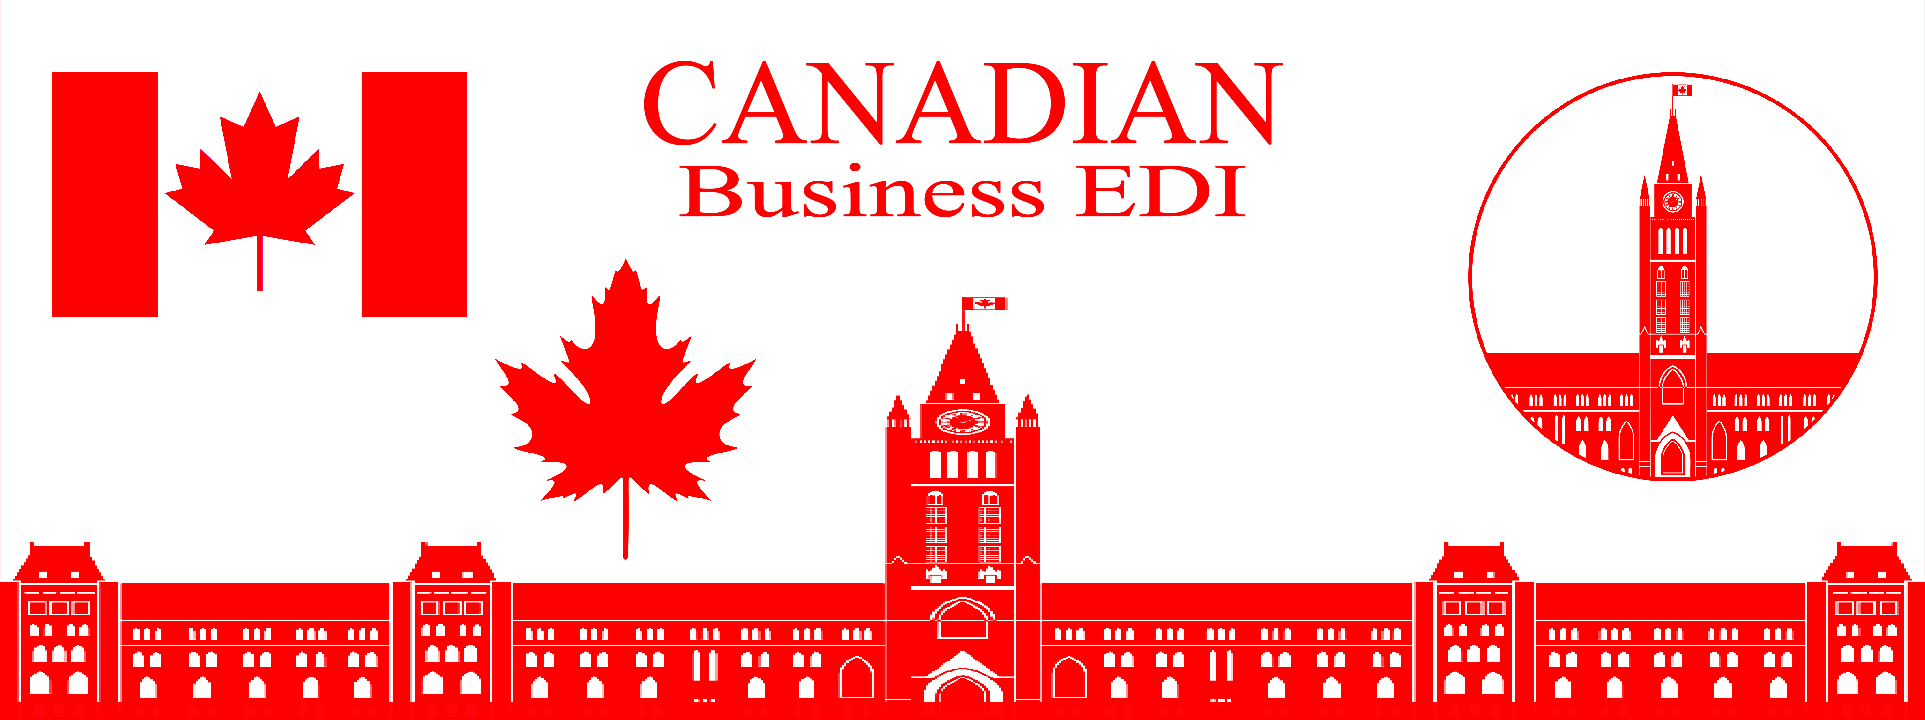 Canadian Business EDI